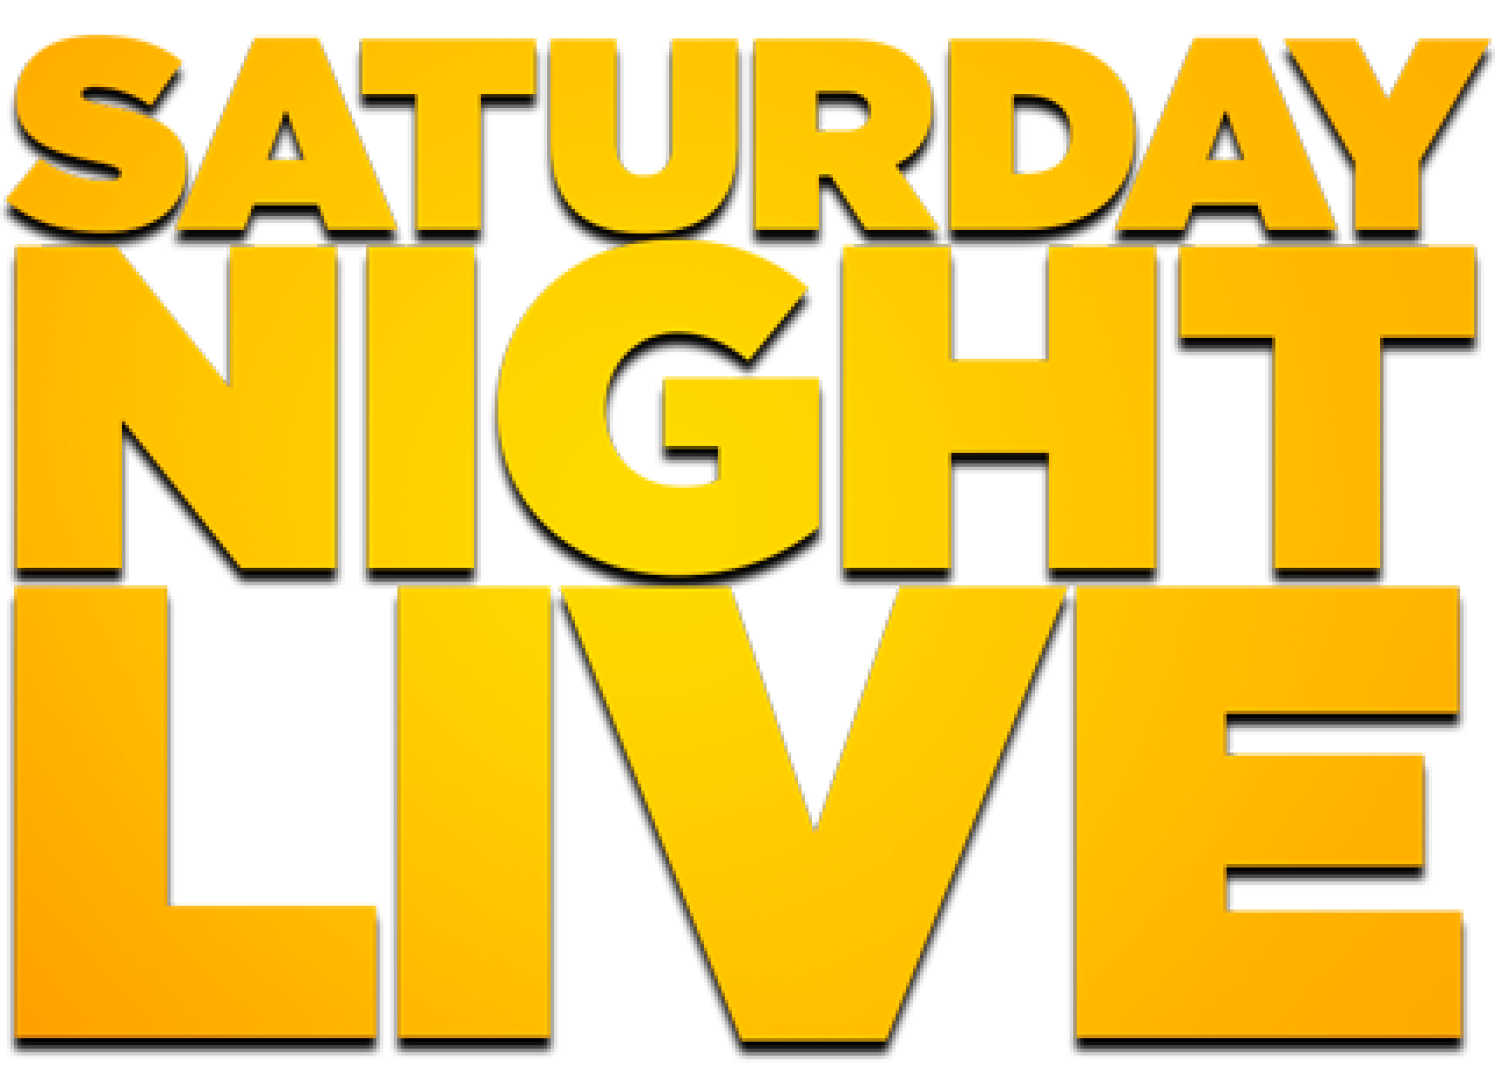 Saturday Night Live logo (20062014) by Blakeharris02 on DeviantArt